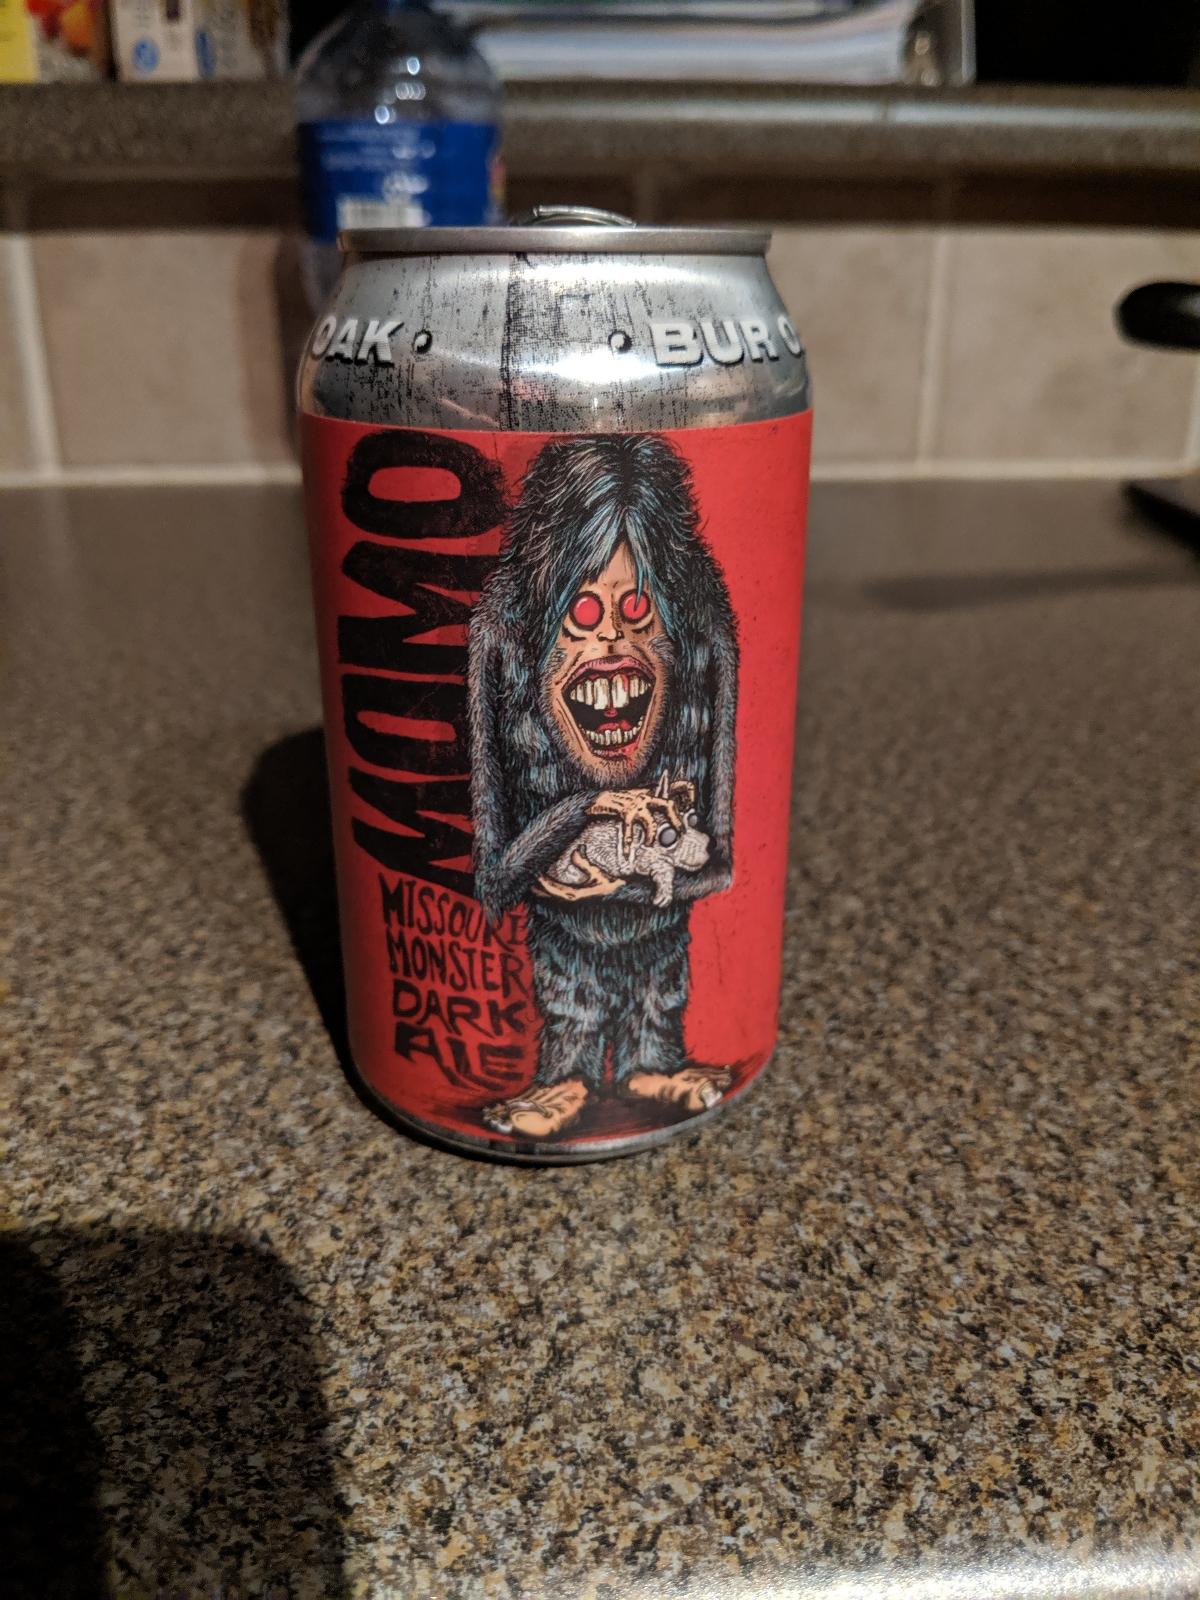 Momo Missouri Monster Dark Ale